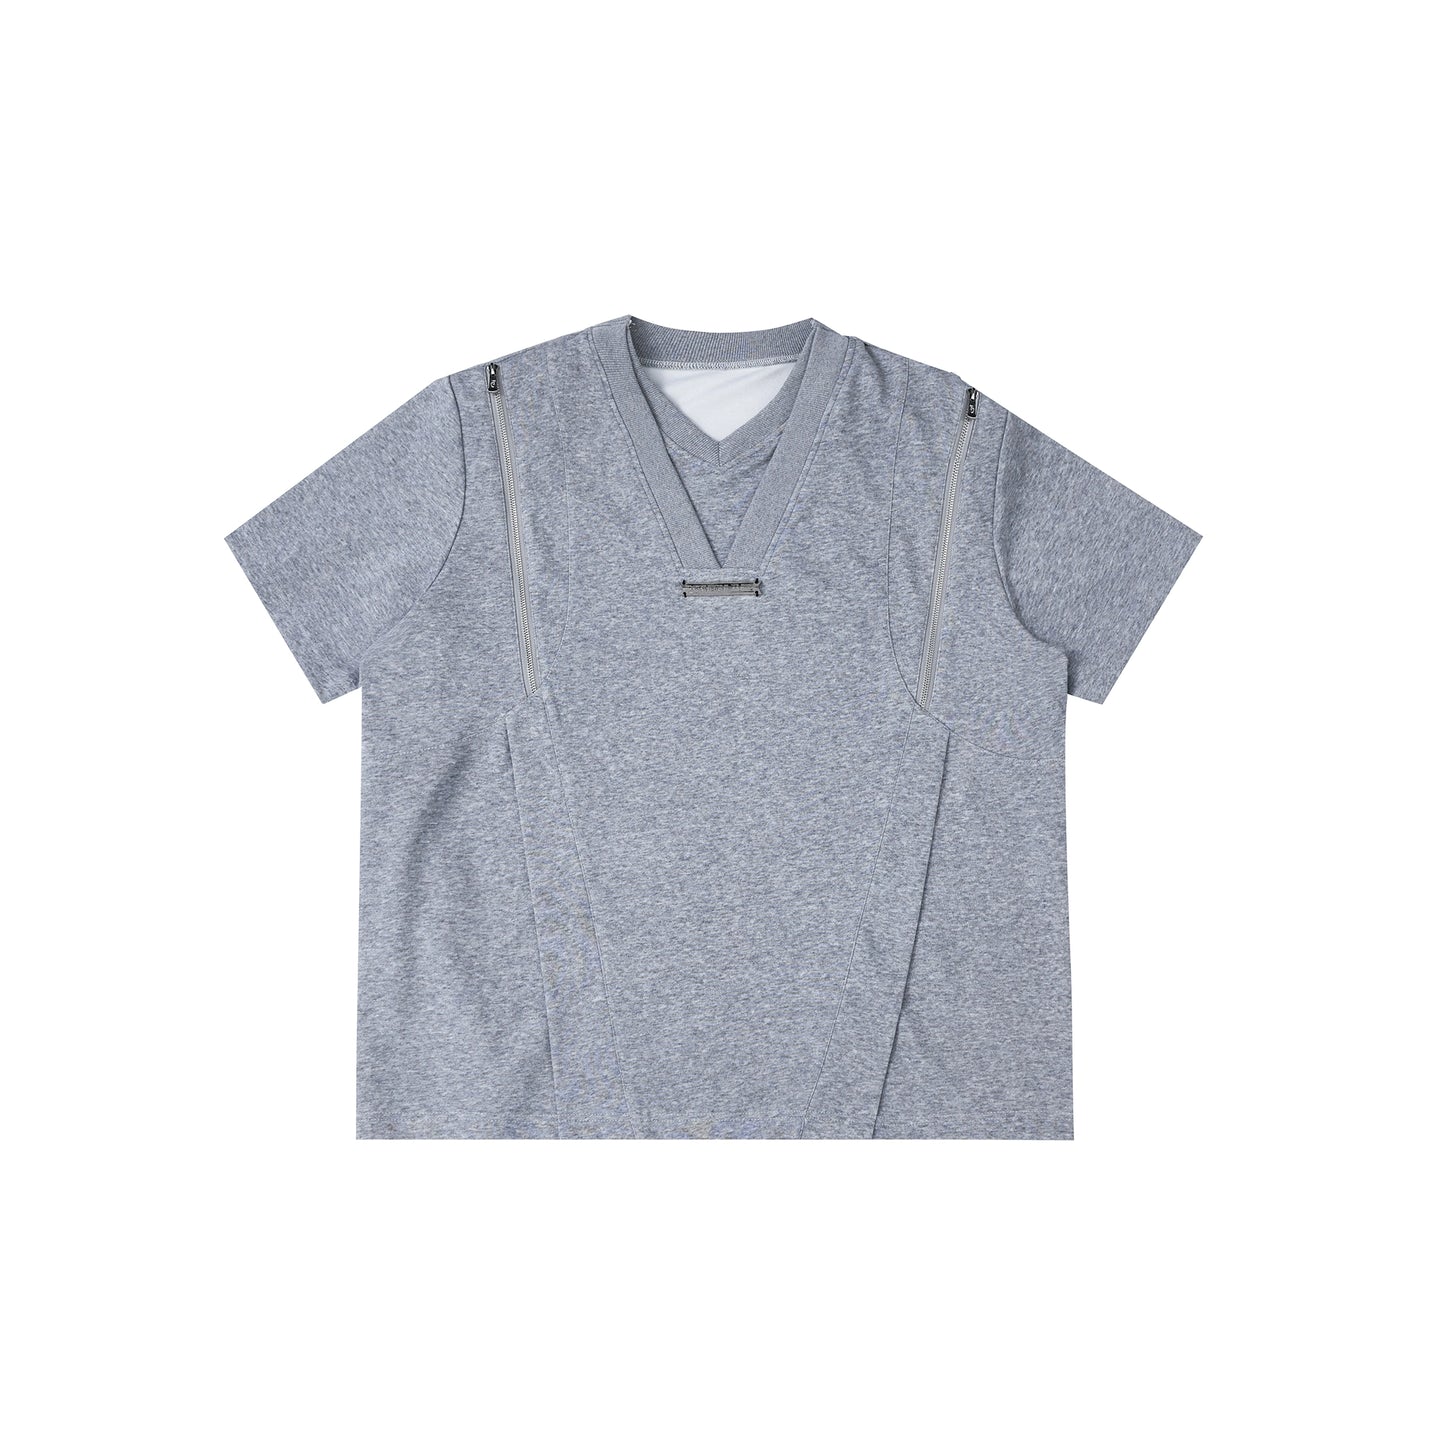 Zipper Design Fake Layered Short Sleeve T-Shirt WN5306